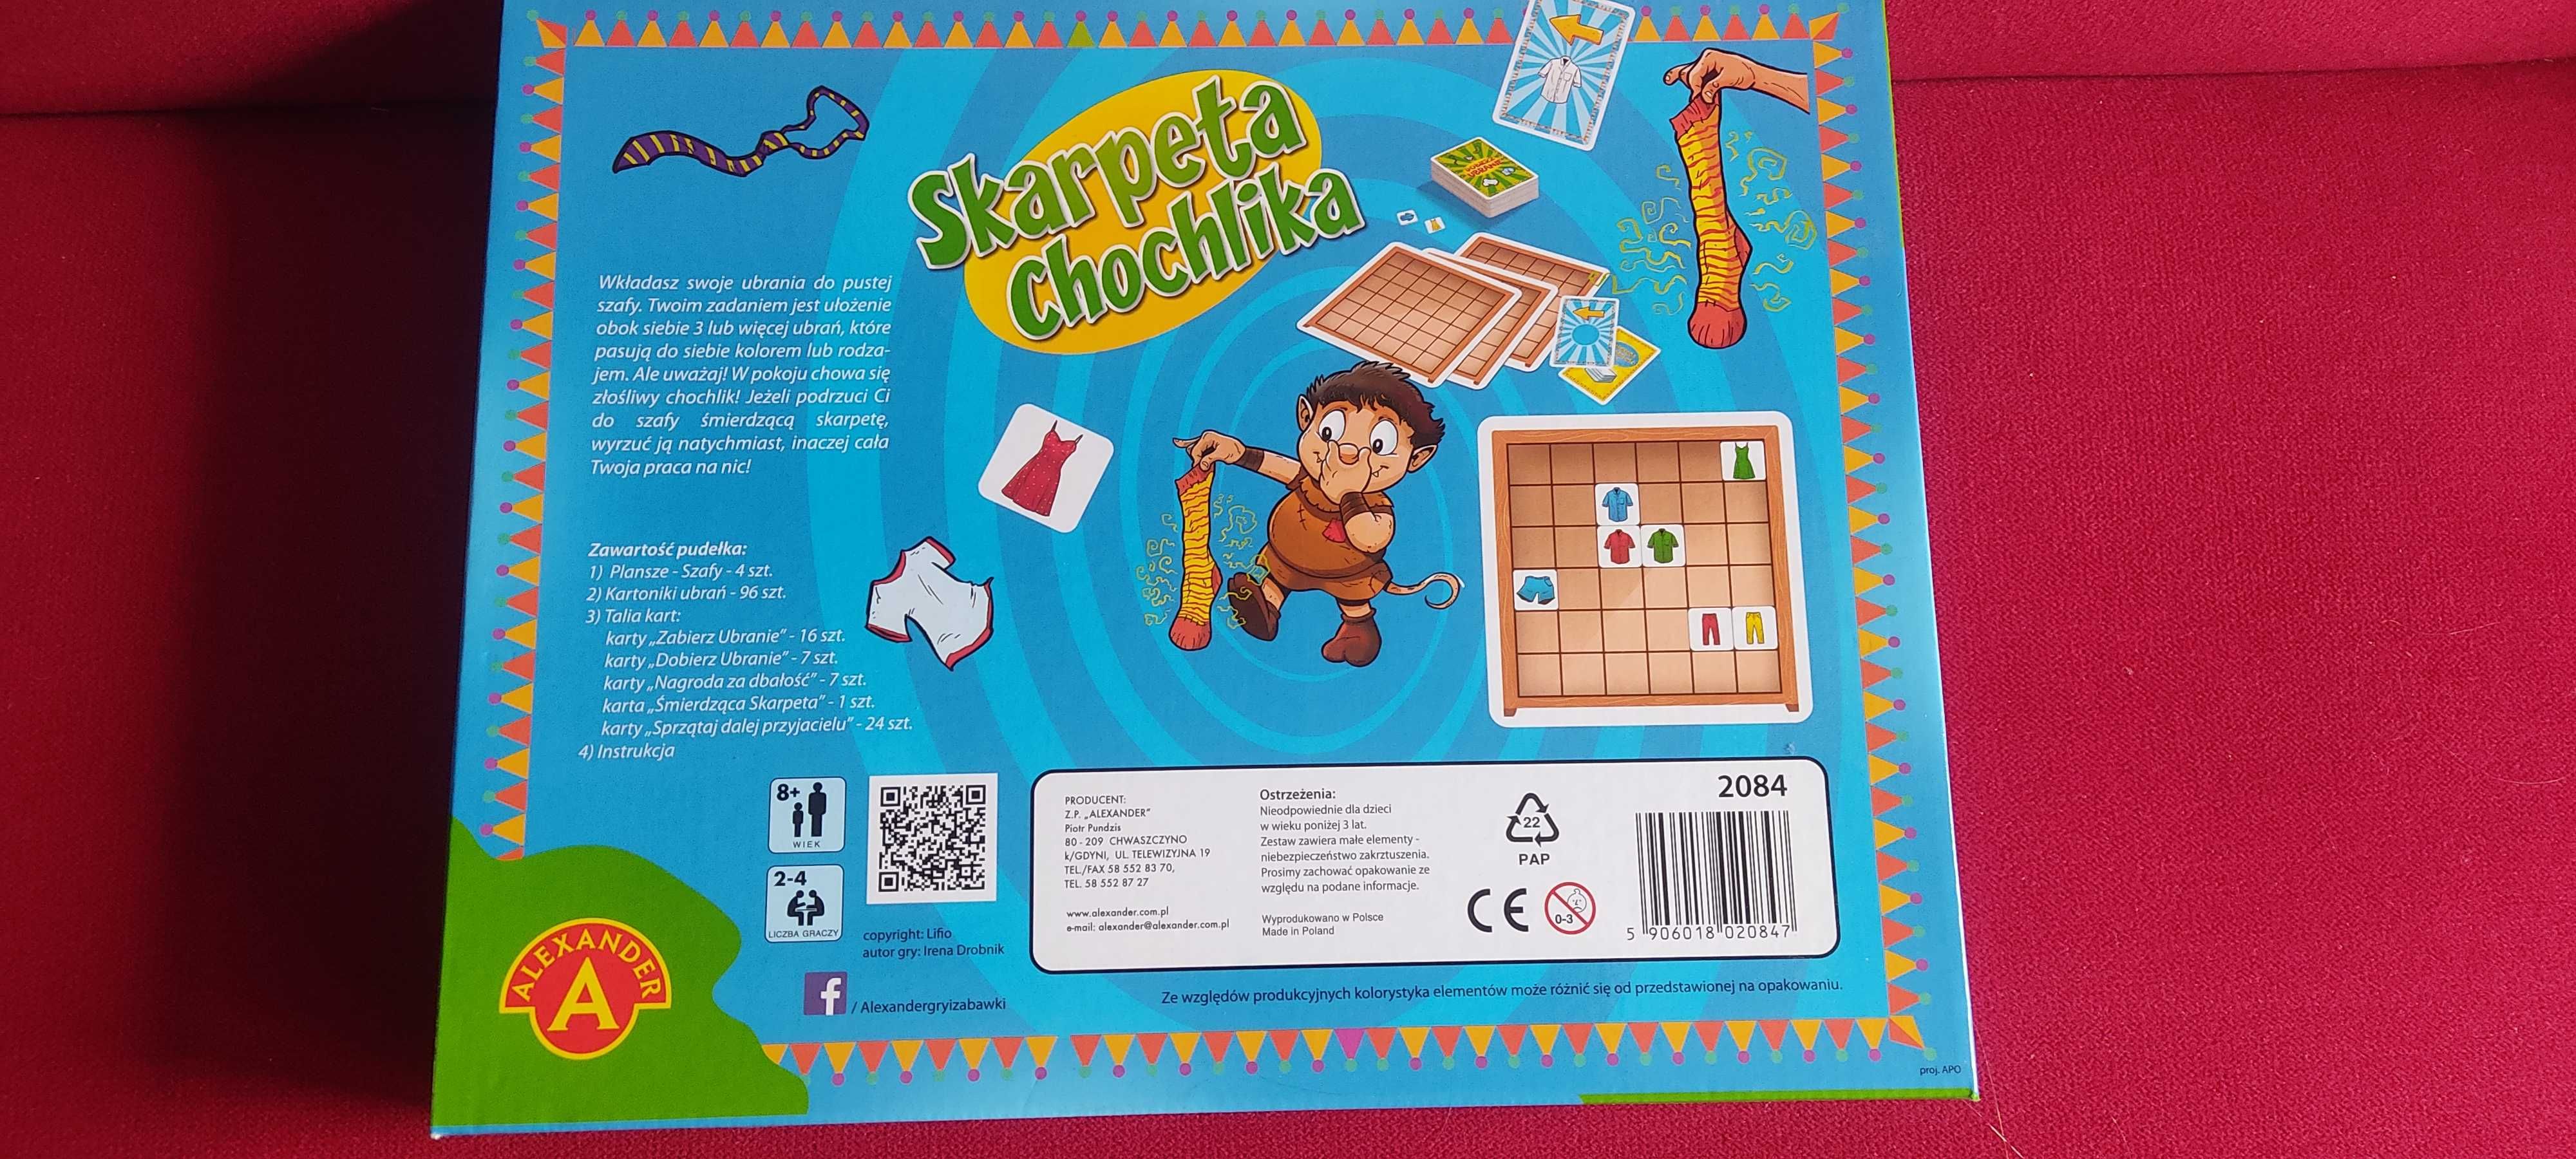 Skarpeta chochlika - gra dla dzieci